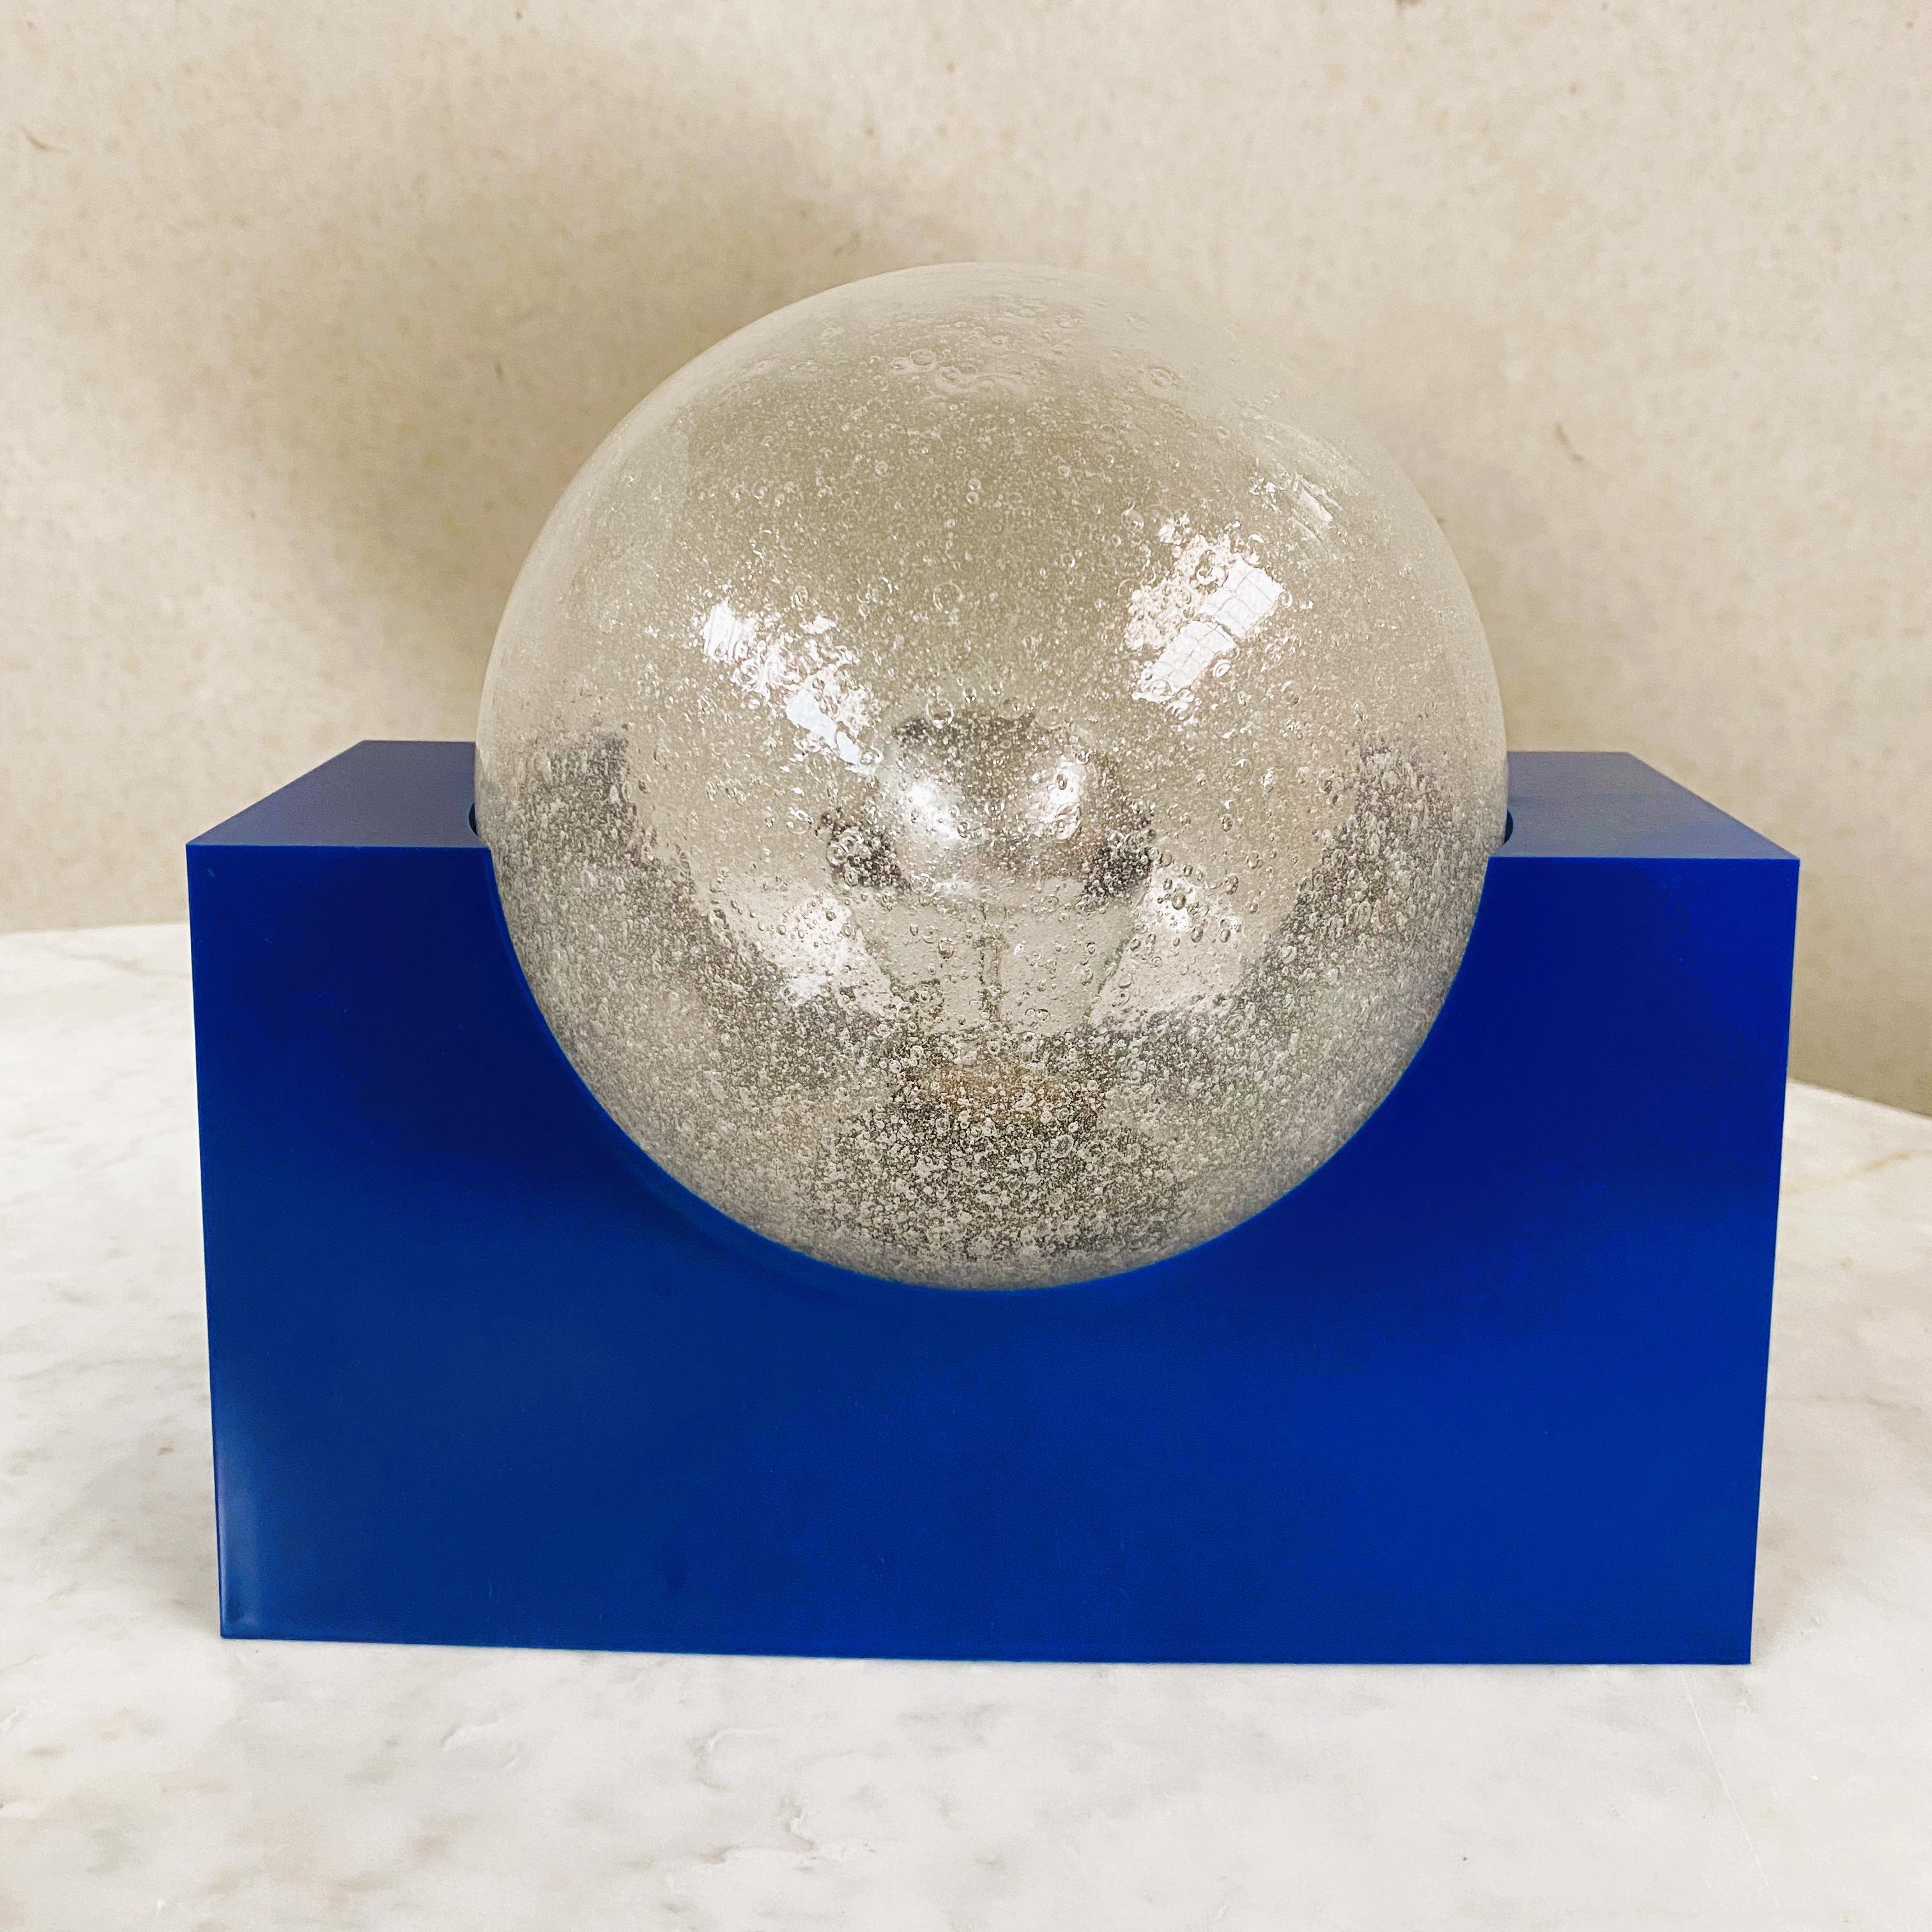 BRIGHT BLUE ACRYLIC BASE AND BUBBLE GLASS SPHERE BY RAAK AMSTERDAM, NETHERLANDS 1970S 

Designer: Raak design team
Manufacturer: Raak Amsterdam
Model: -
Material: Acrylic, bubble glass

Measurements:
Height: 23 cm 
Width: 26 cm 
Depth: 18